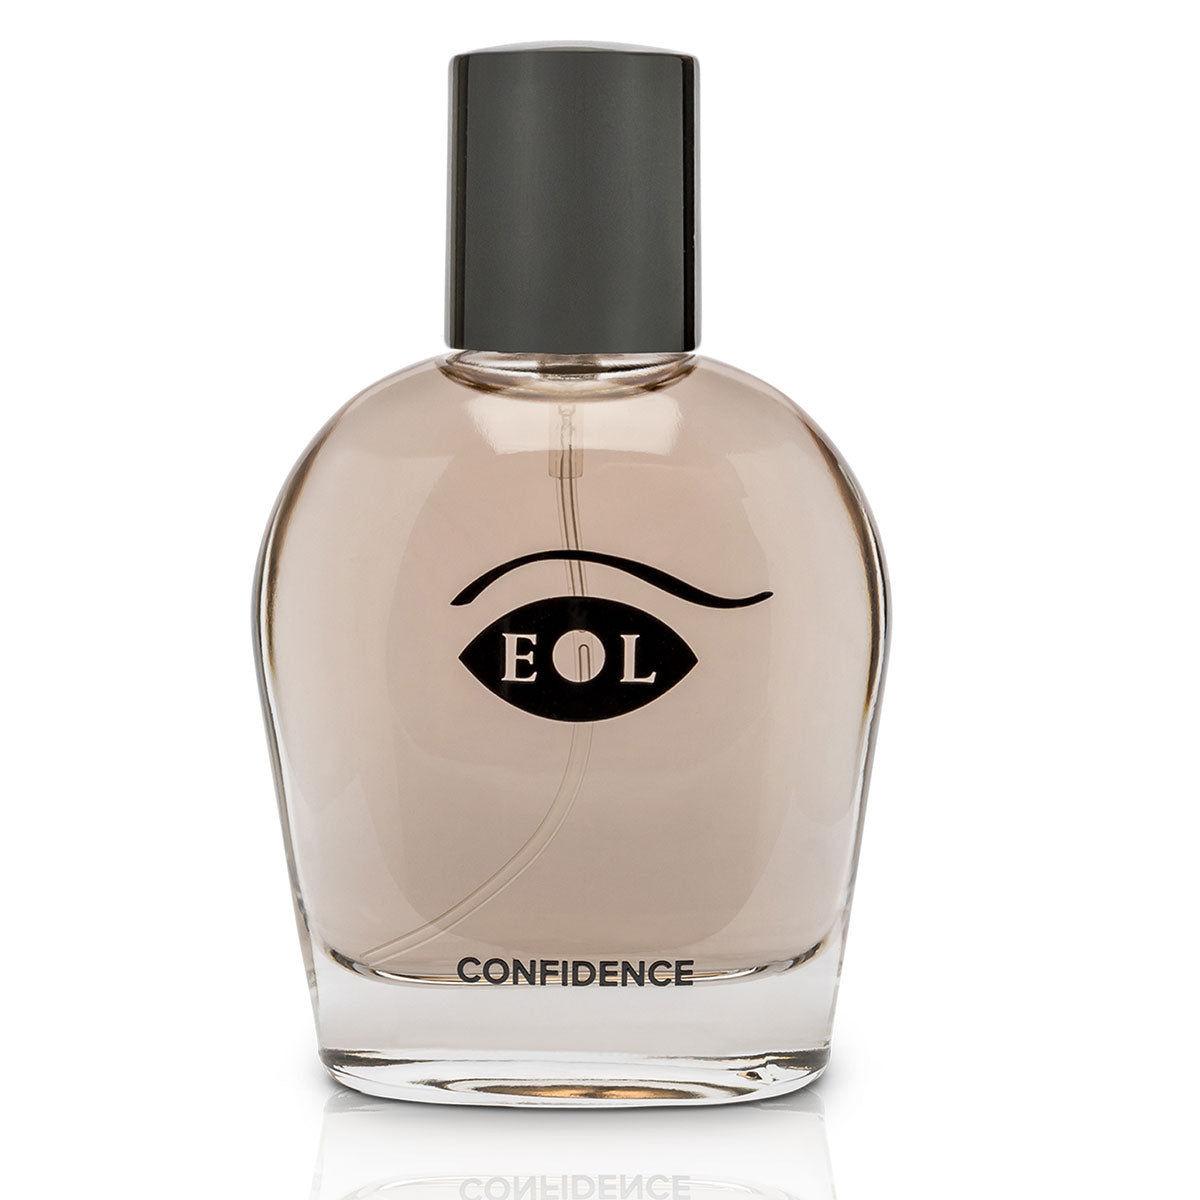 Eye of Love Pheromone Parfum 50ml  Confidence (M to F)